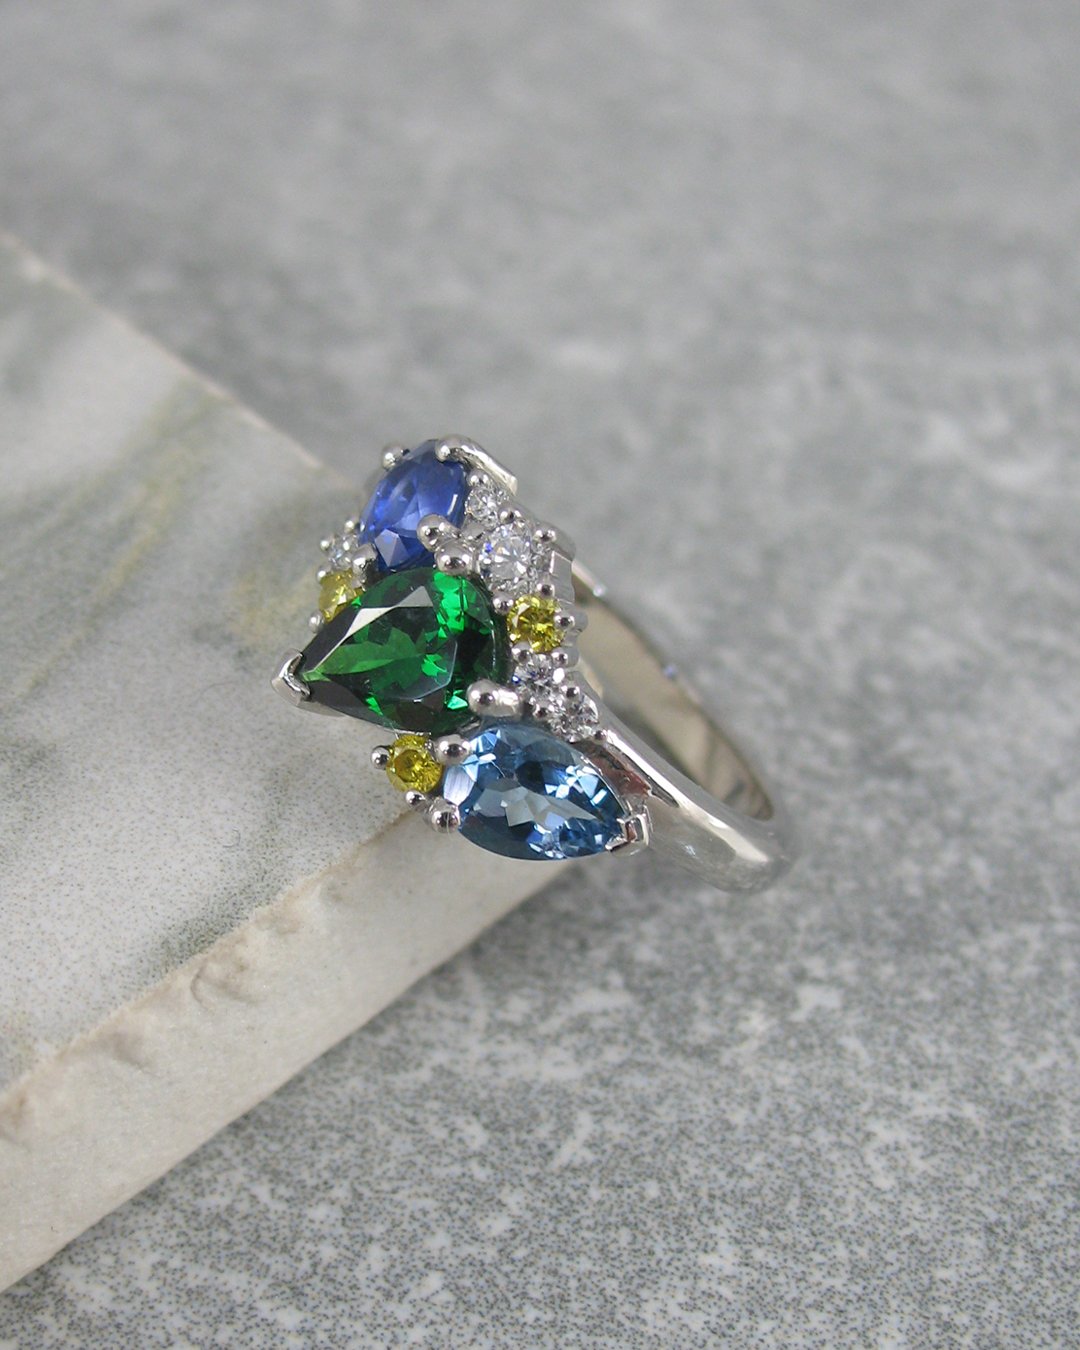 A colourful cluster ring featuring an oval sapphire, pear shaped tsavorite garnet, a pear shaped aquamarine and diamonds